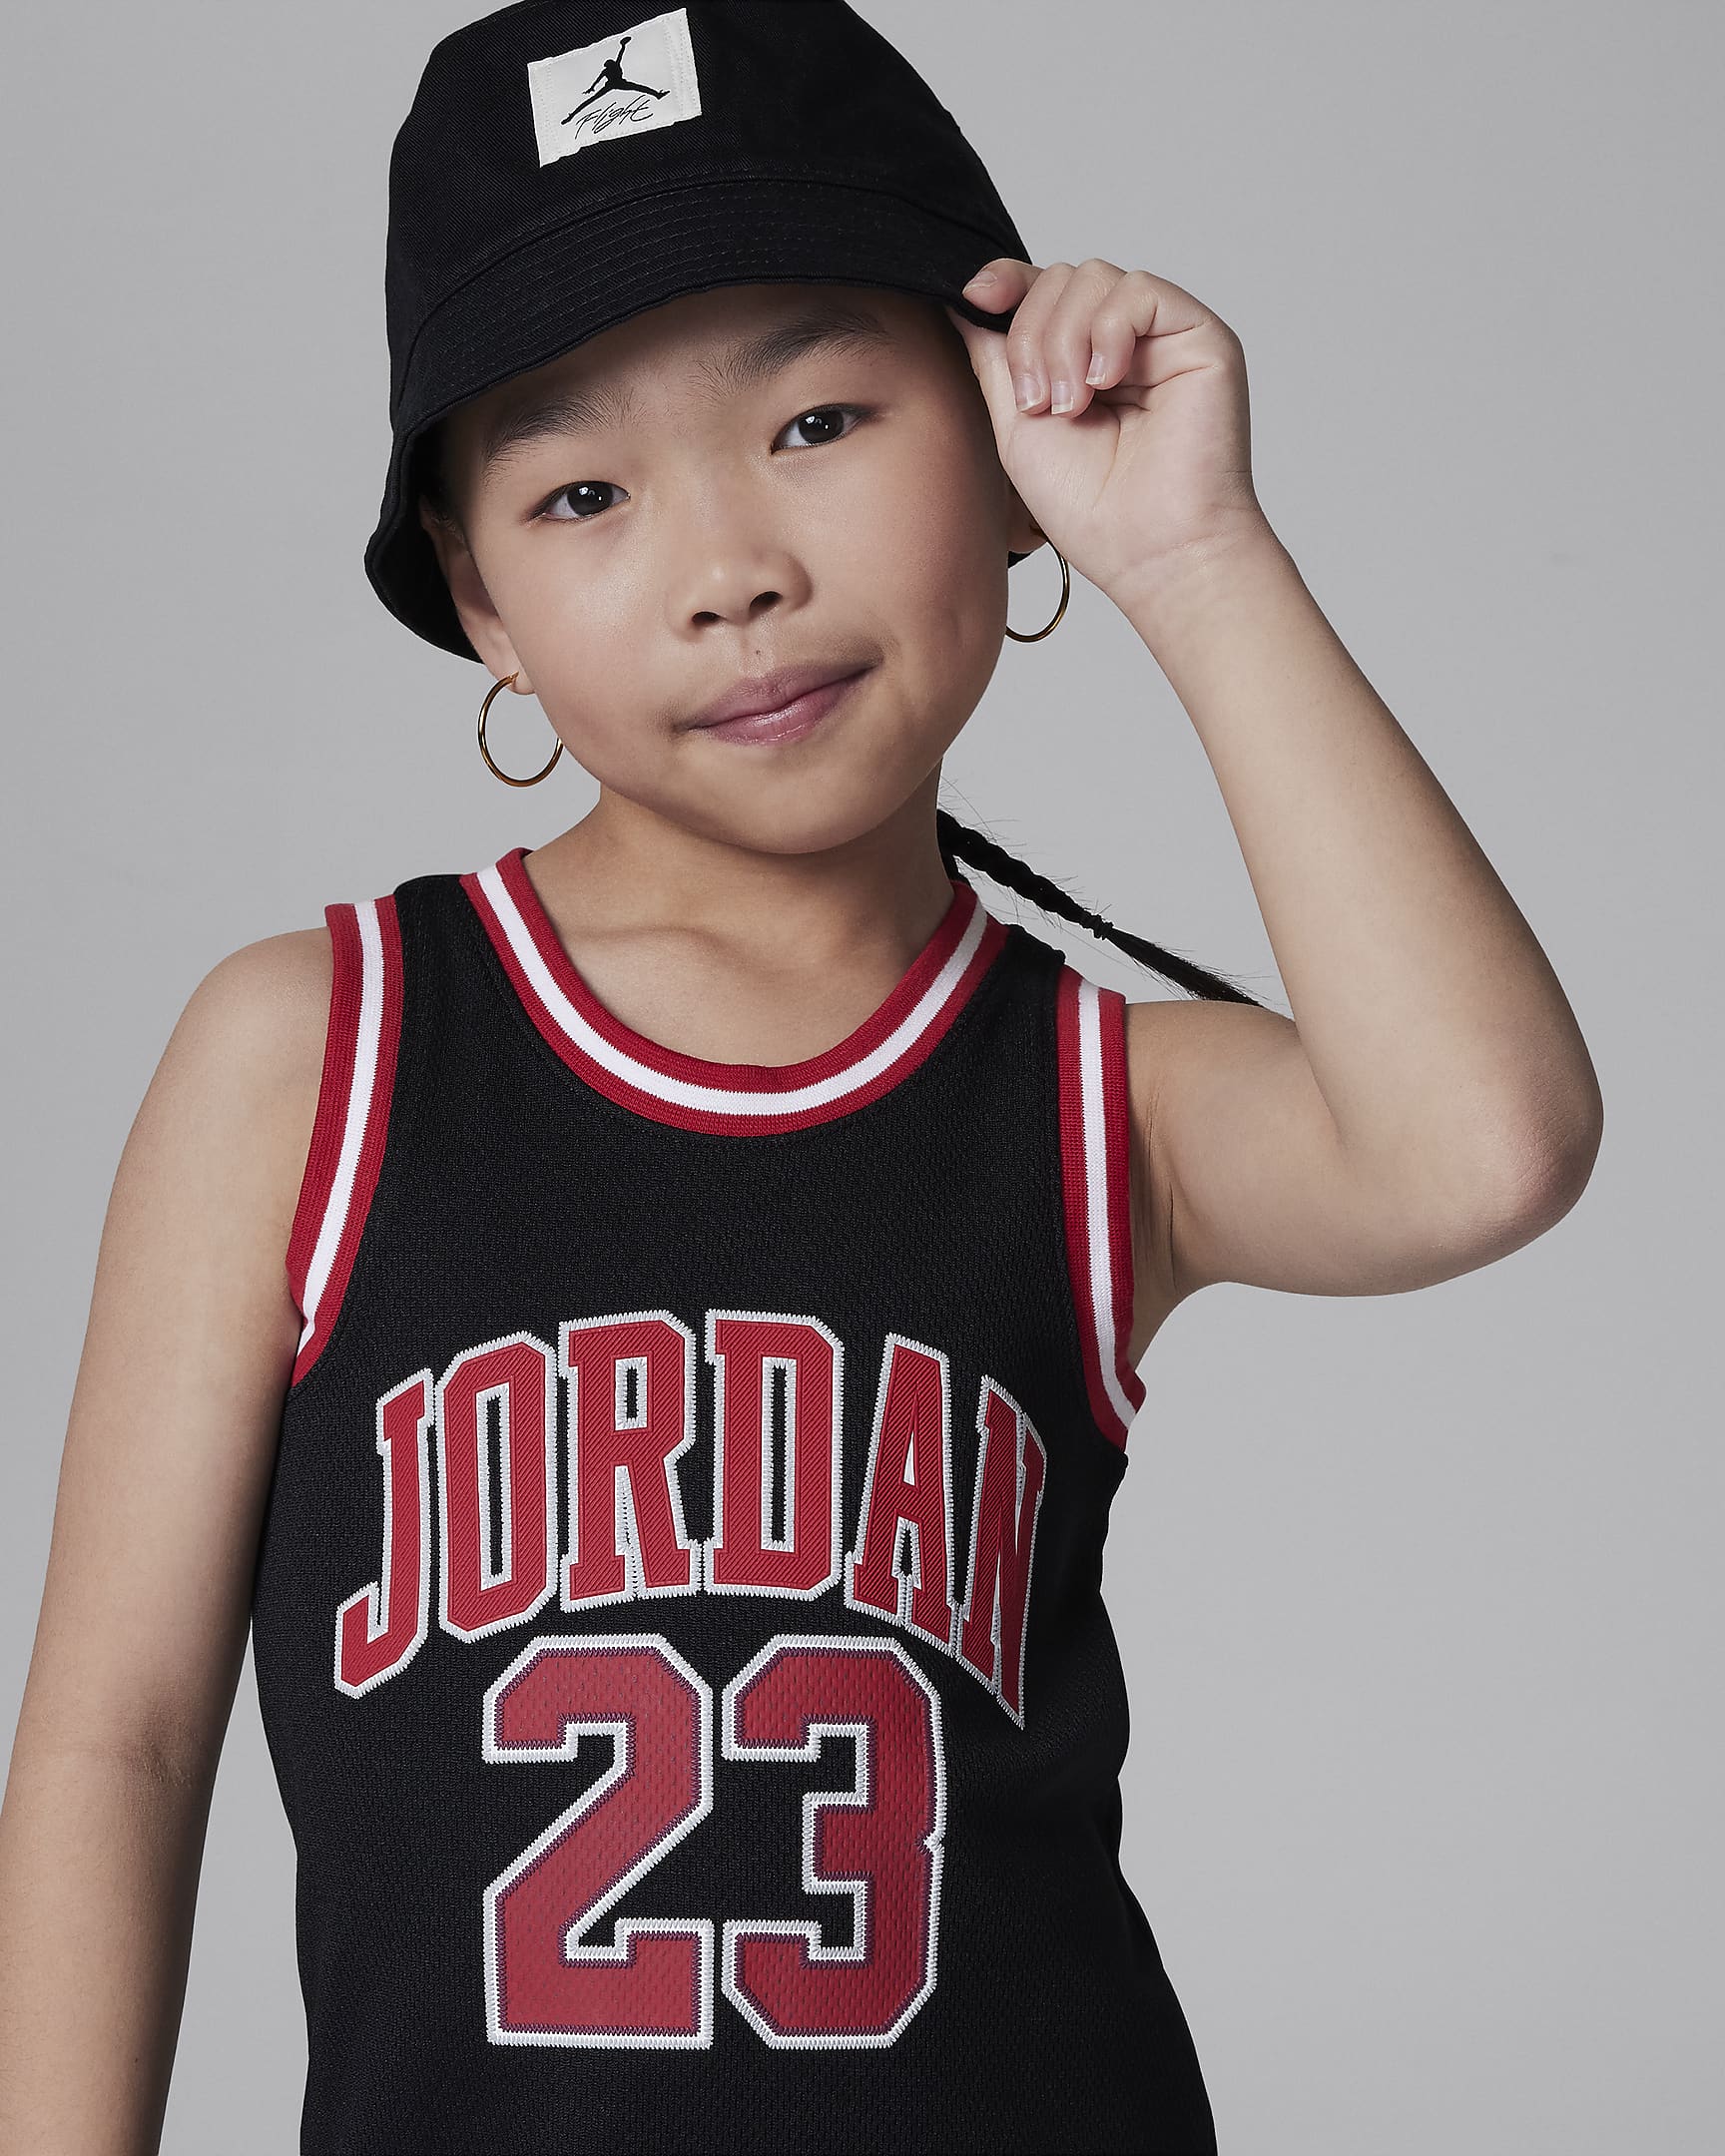 Jordan 23 Jersey kleuterjurk - Zwart